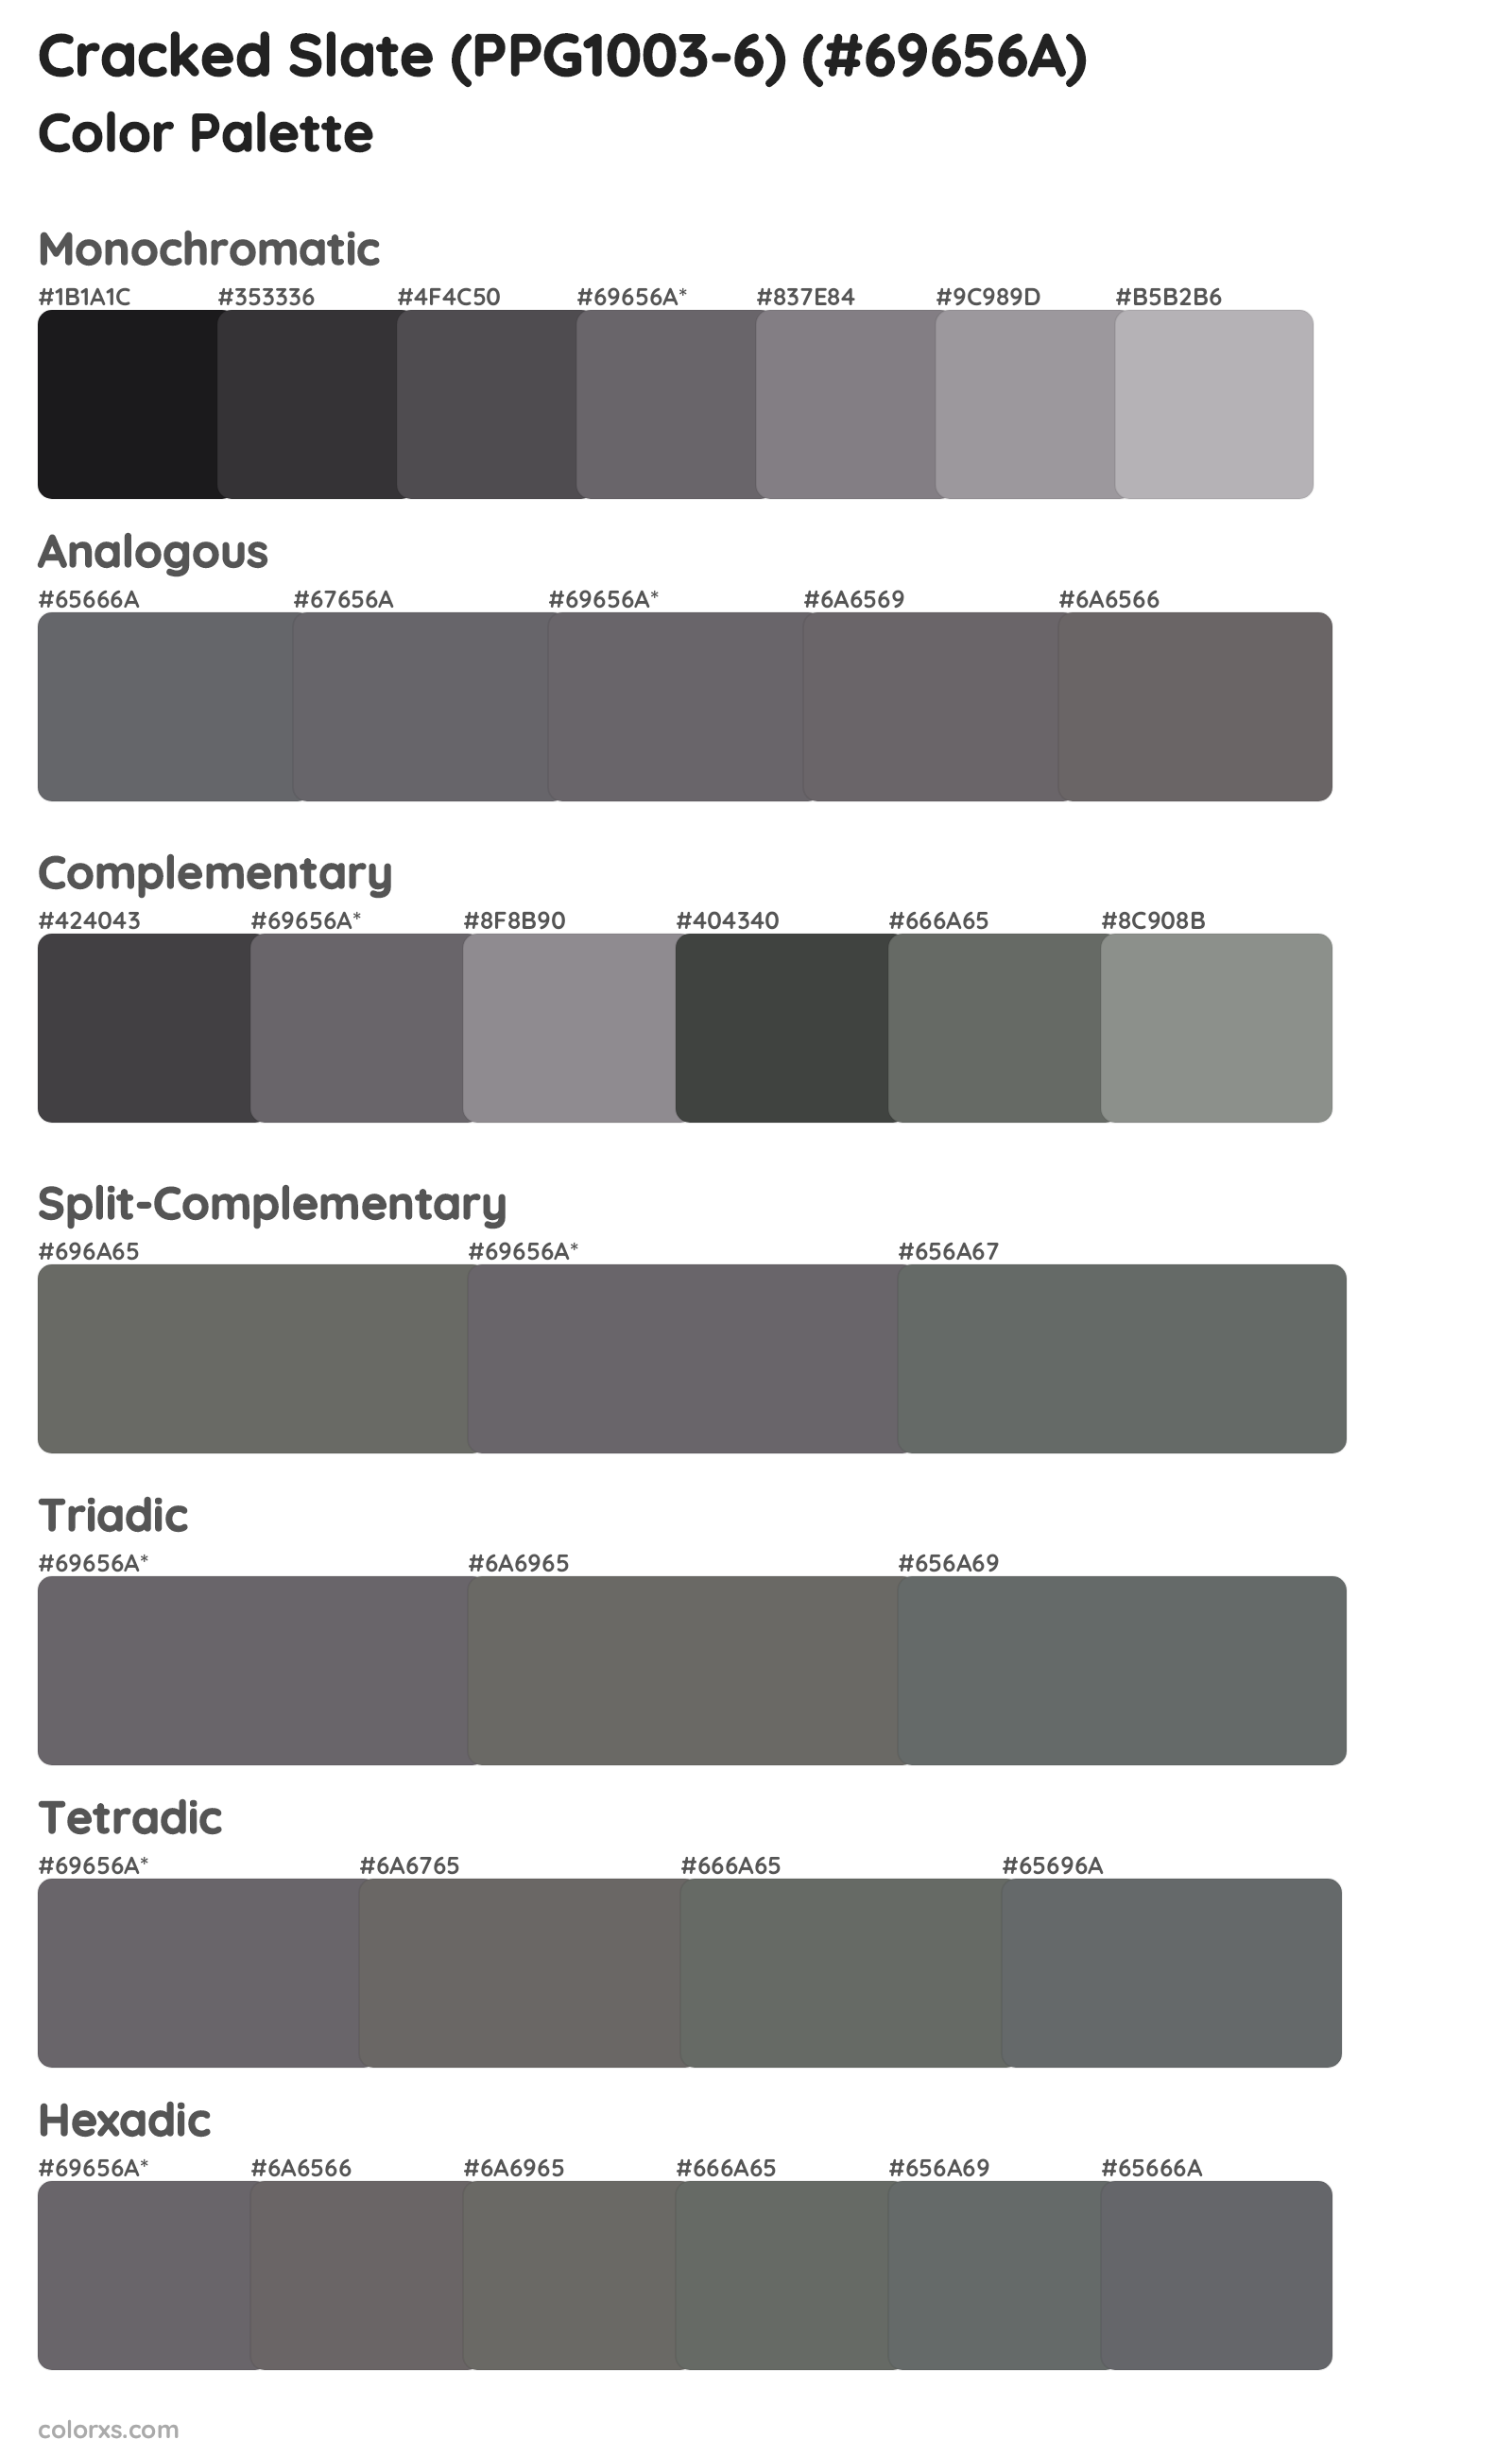 Cracked Slate (PPG1003-6) Color Scheme Palettes